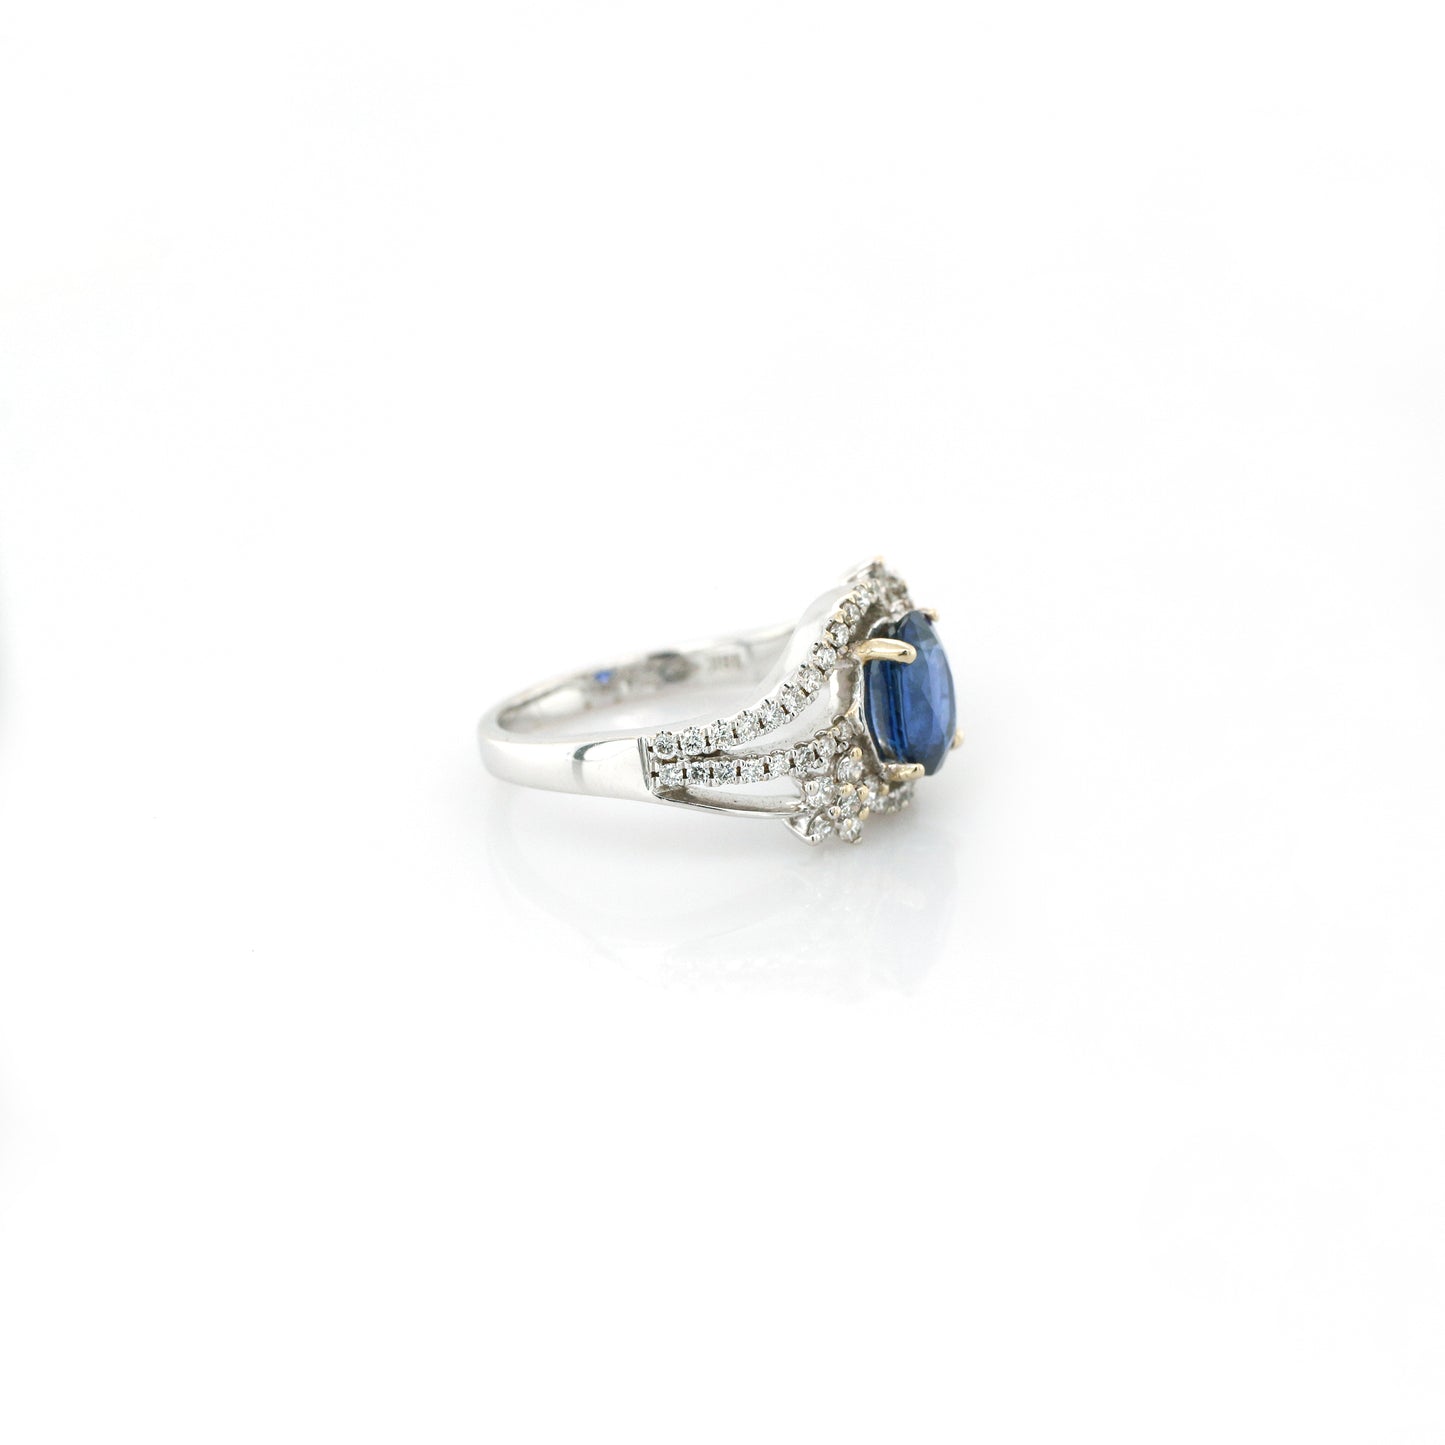 Blue Sapphire & Diamond Ring - 18K White Gold  4.54gm